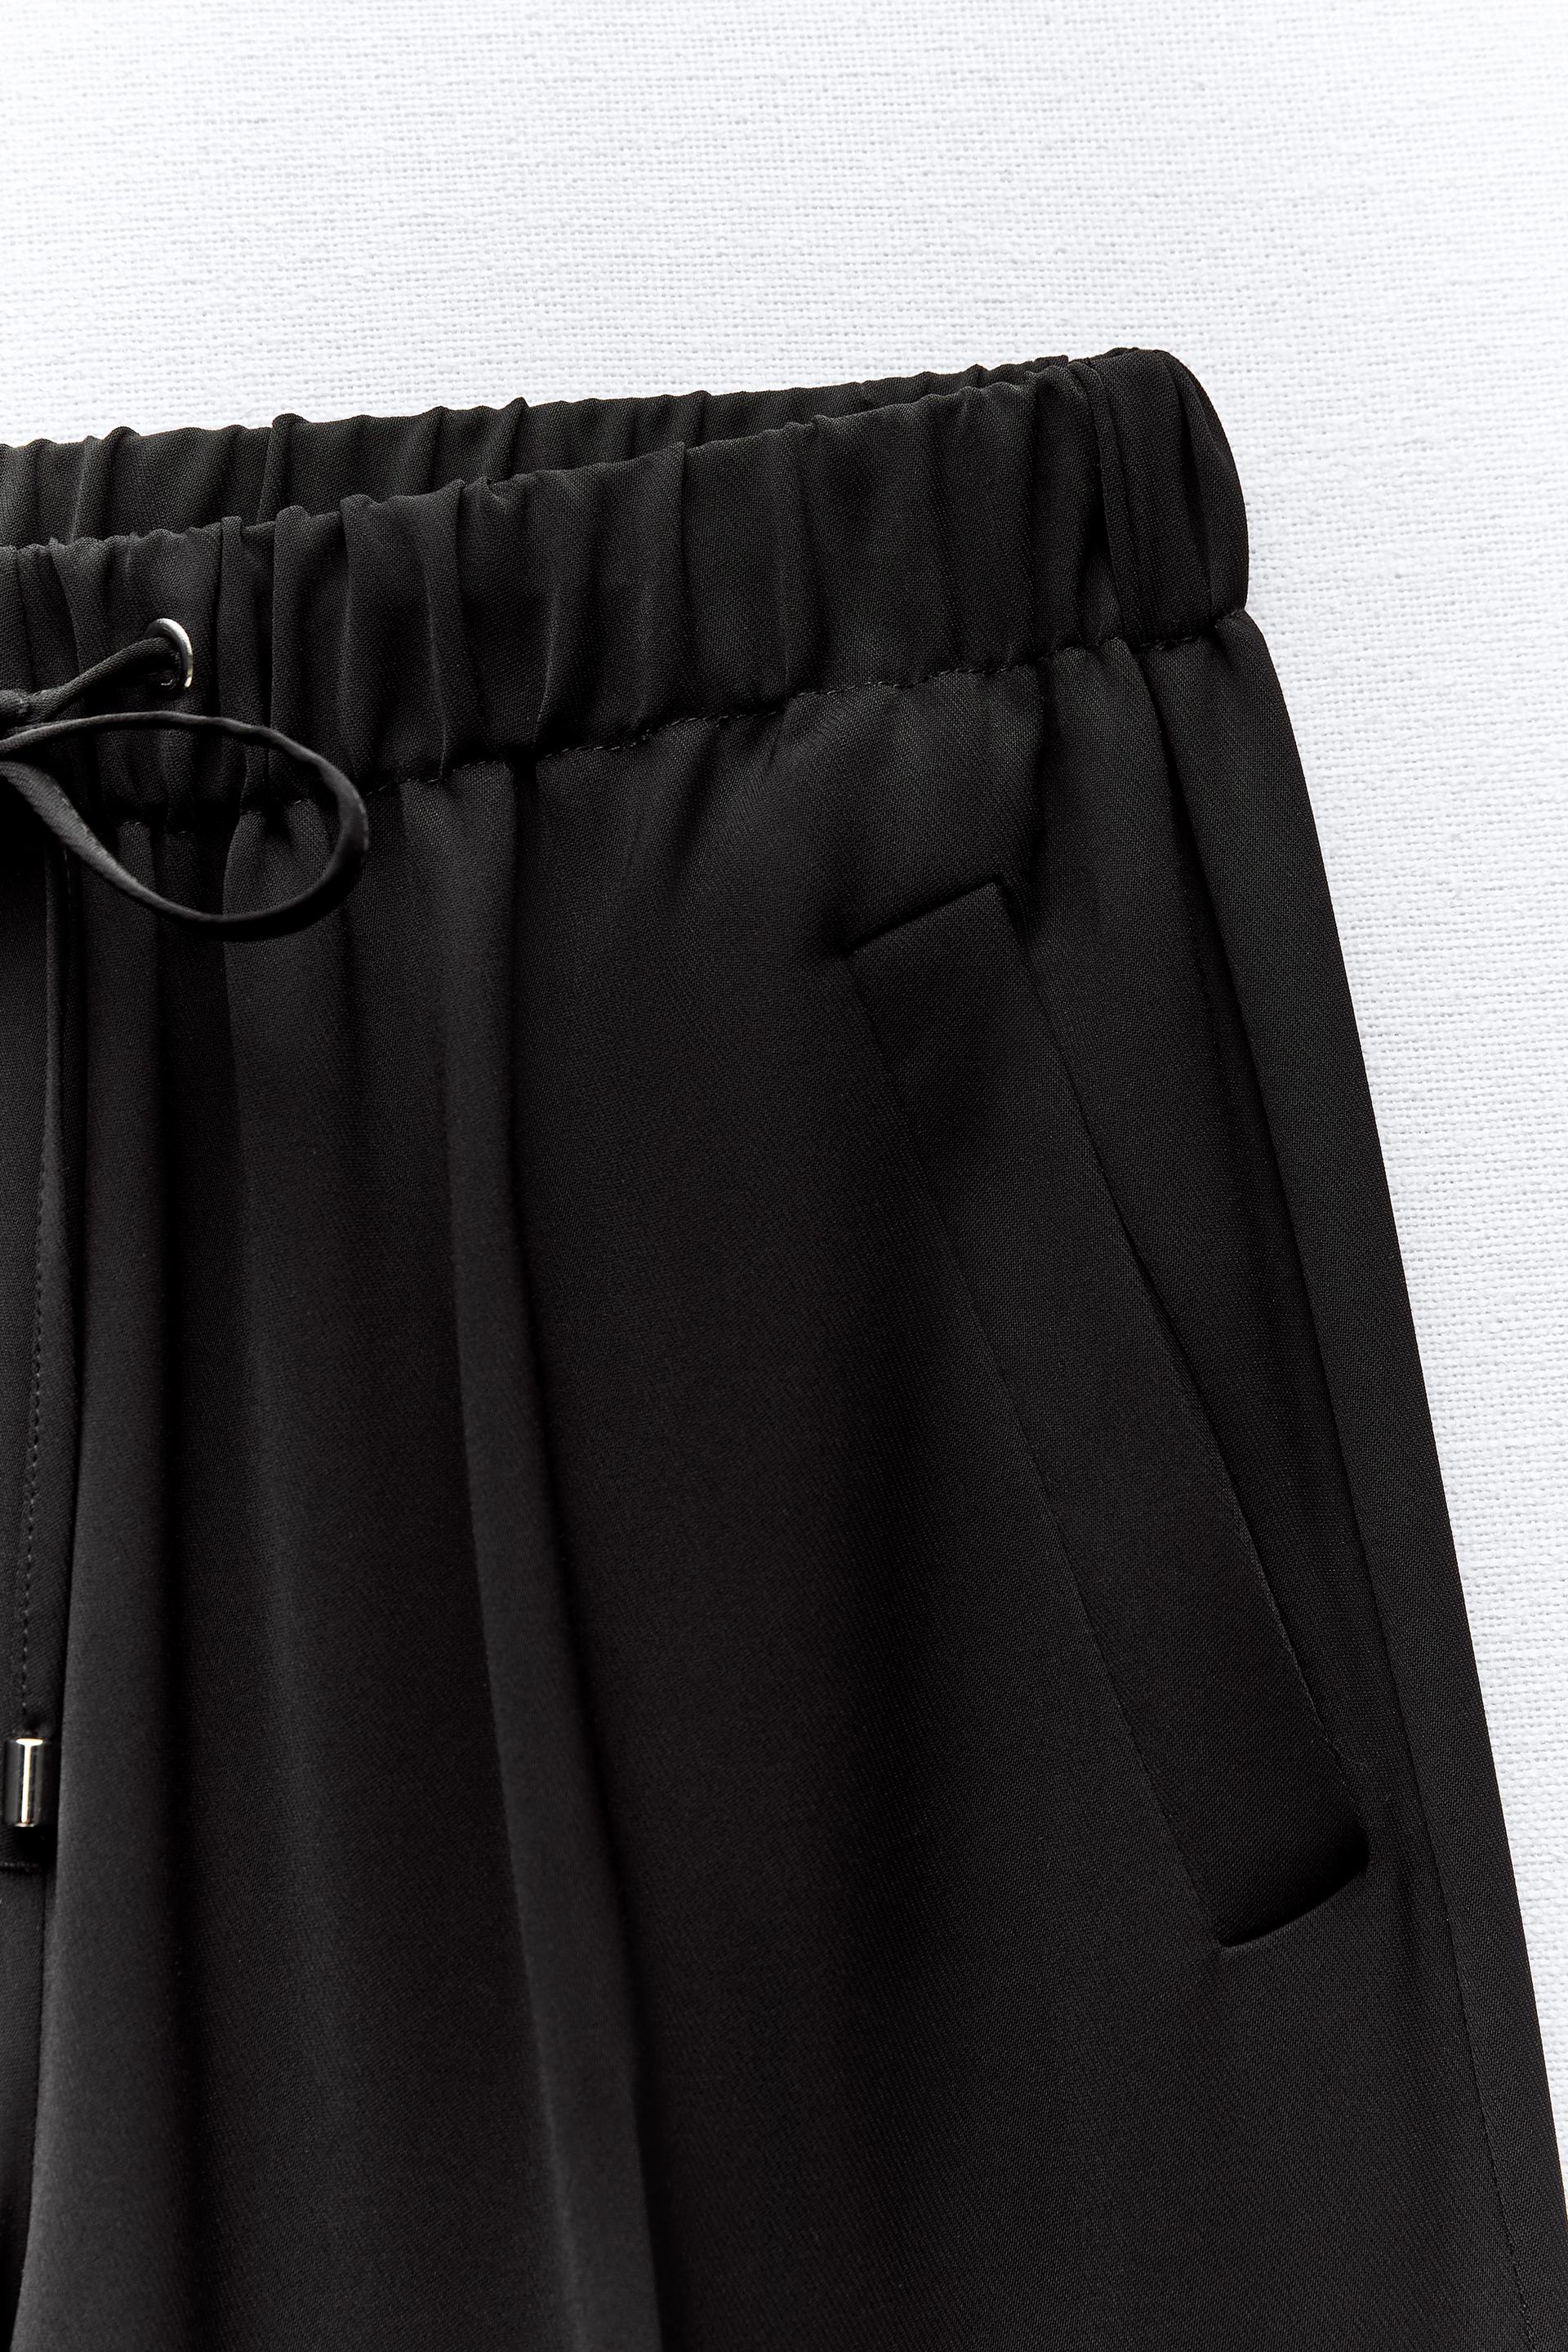 Zara Women's Geometric Print Elastic Waist Wide Leg Pants Black Size X -  Shop Linda's Stuff